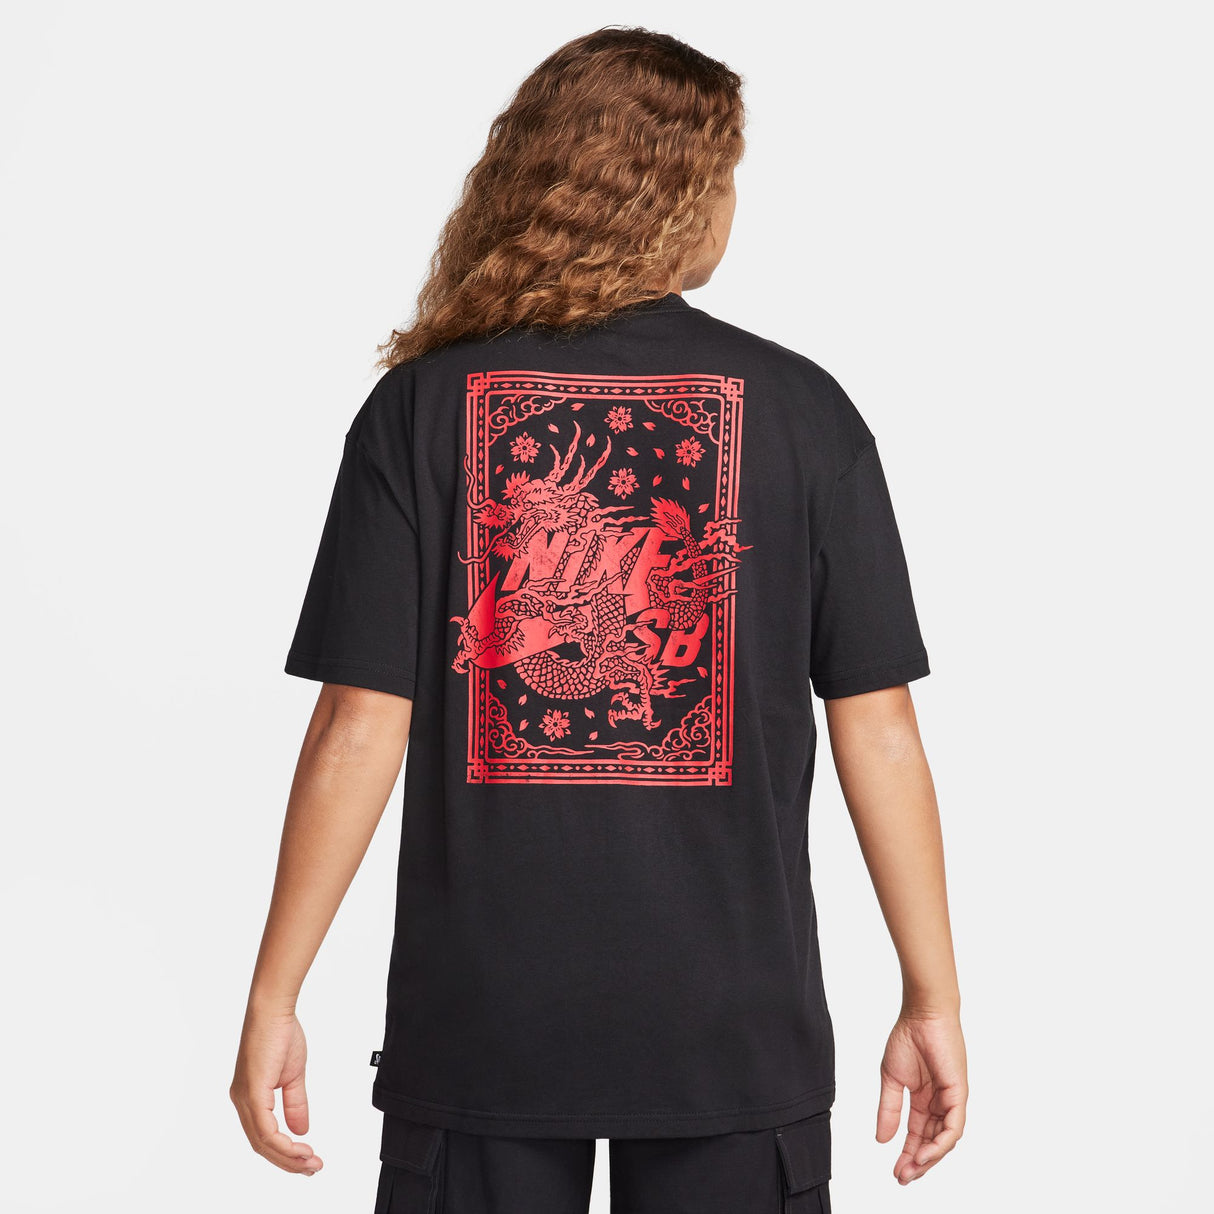 Nike SB Year Of The Dragon Black S/s Shirt